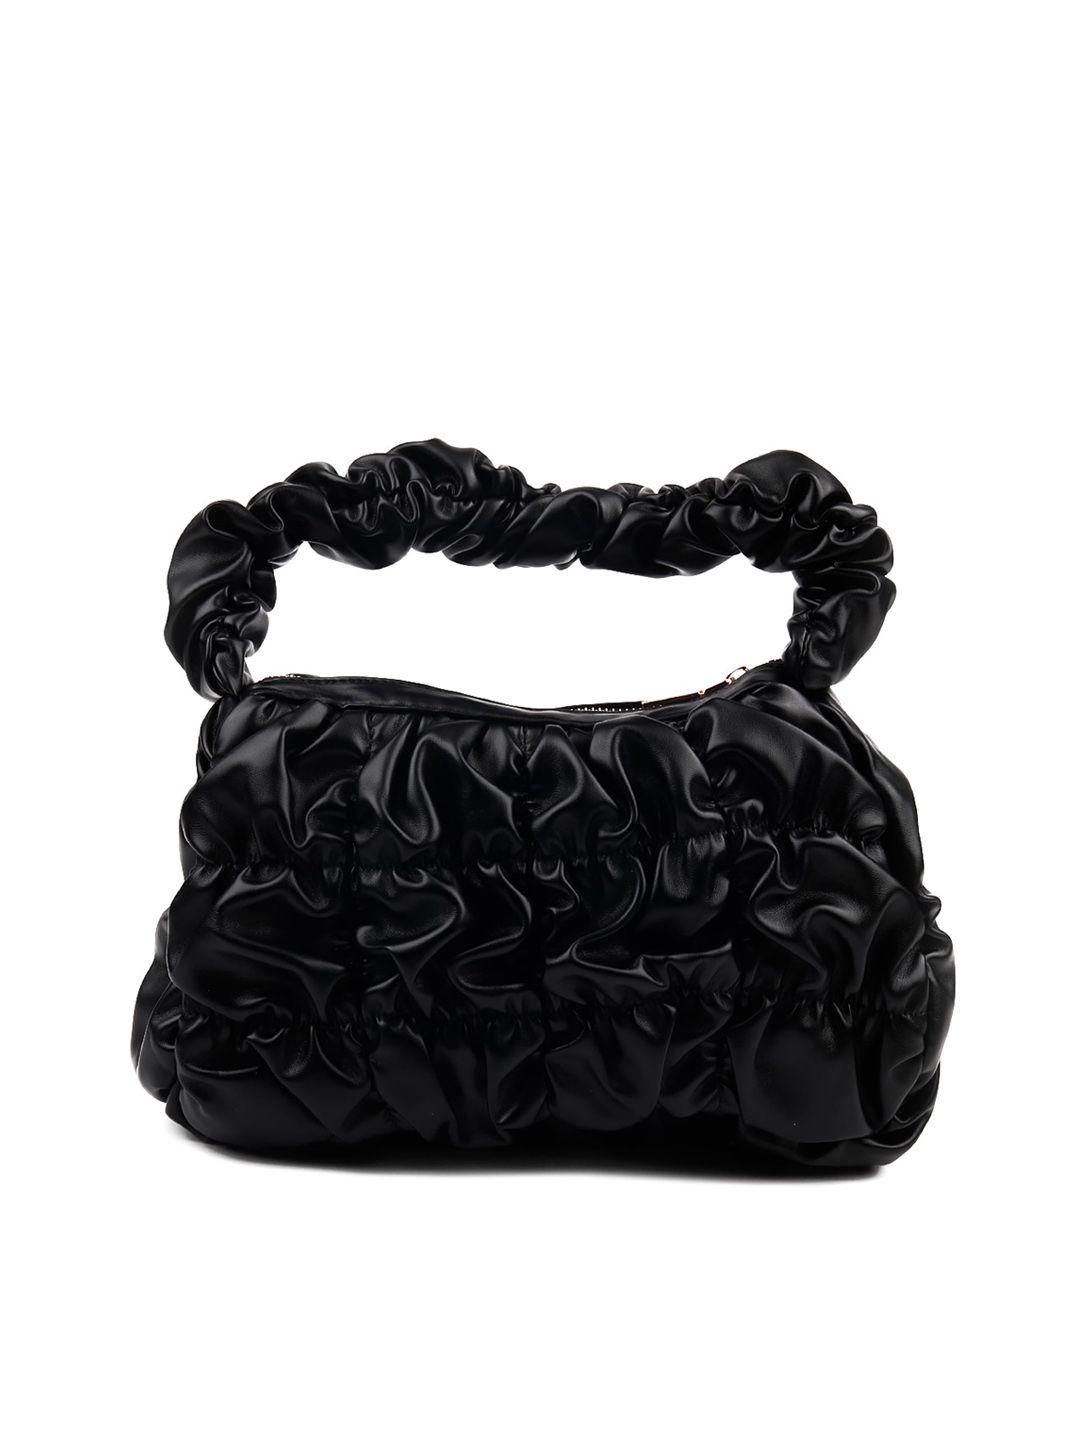 odette black textured leather structured handheld bag with tasselled